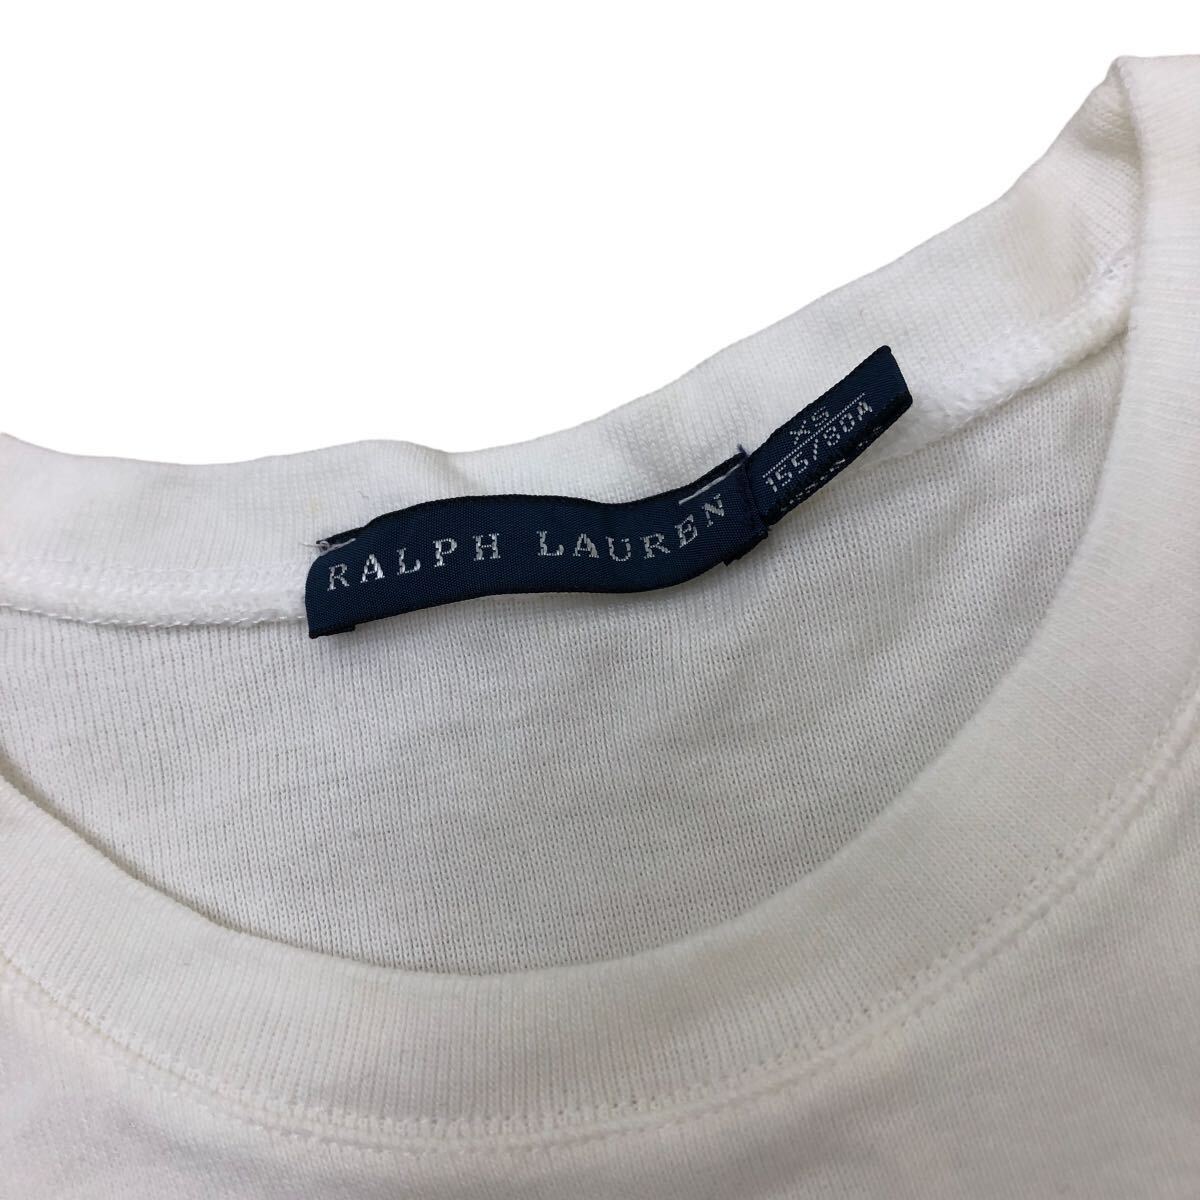 Nm204-8 RALPH LAUREN Ralph Lauren короткий рукав футболка po колено вышивка рубашка cut and sewn хлопок хлопок 100% tops белый женский XS